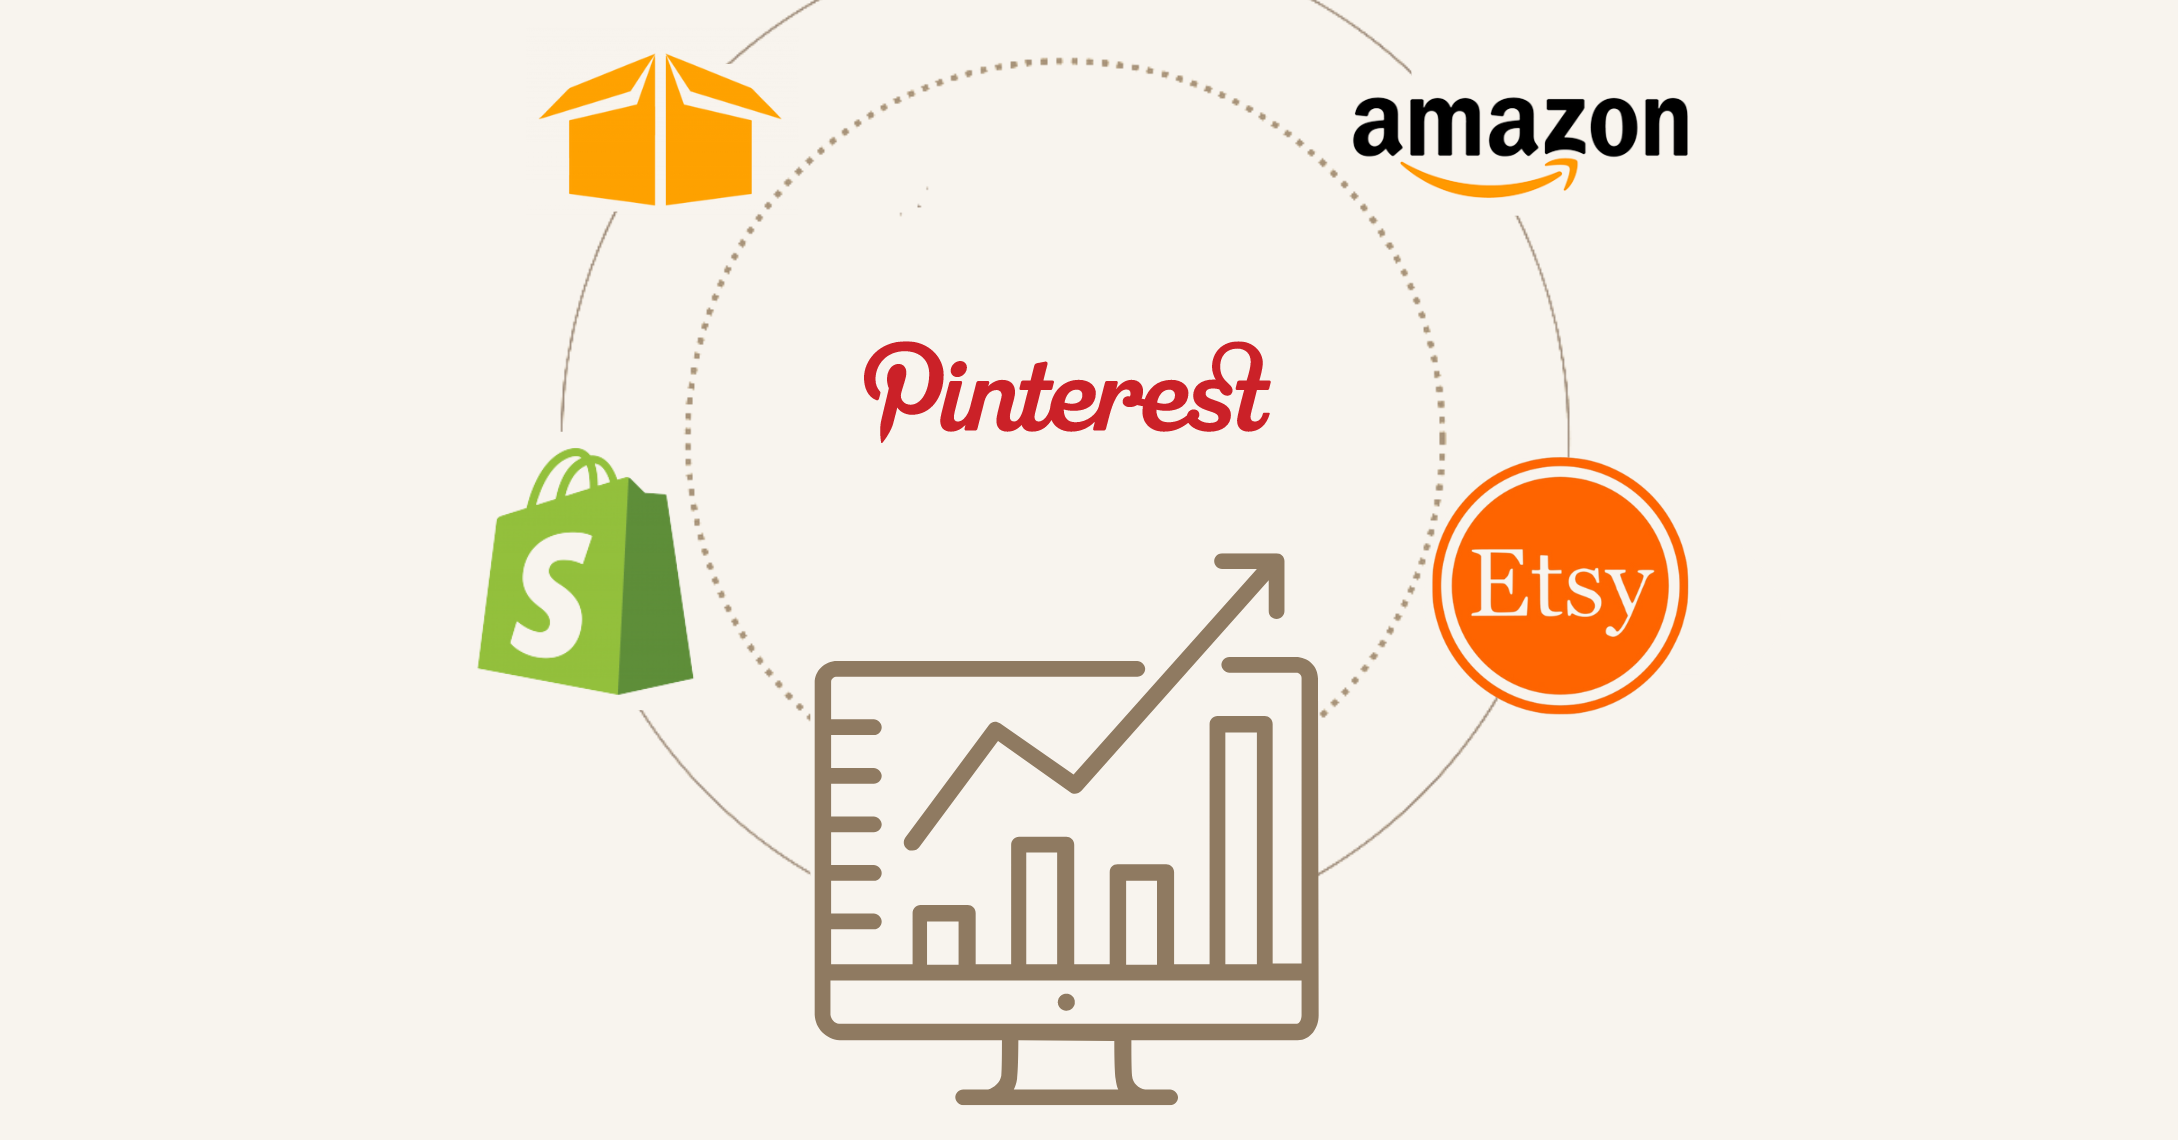 Развитие магазина Etsy, Amazon, Shopify благодаря инструментам Pinterest